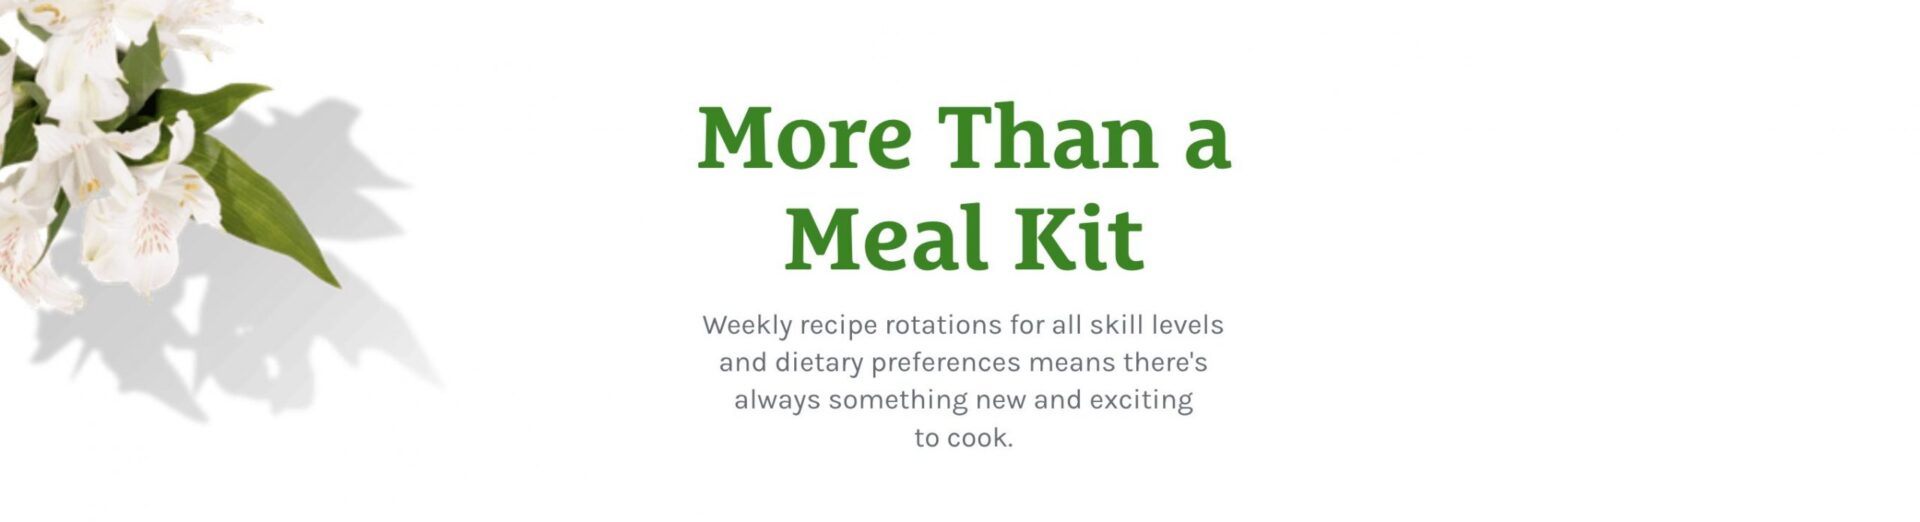 Home Chef Meal Kits